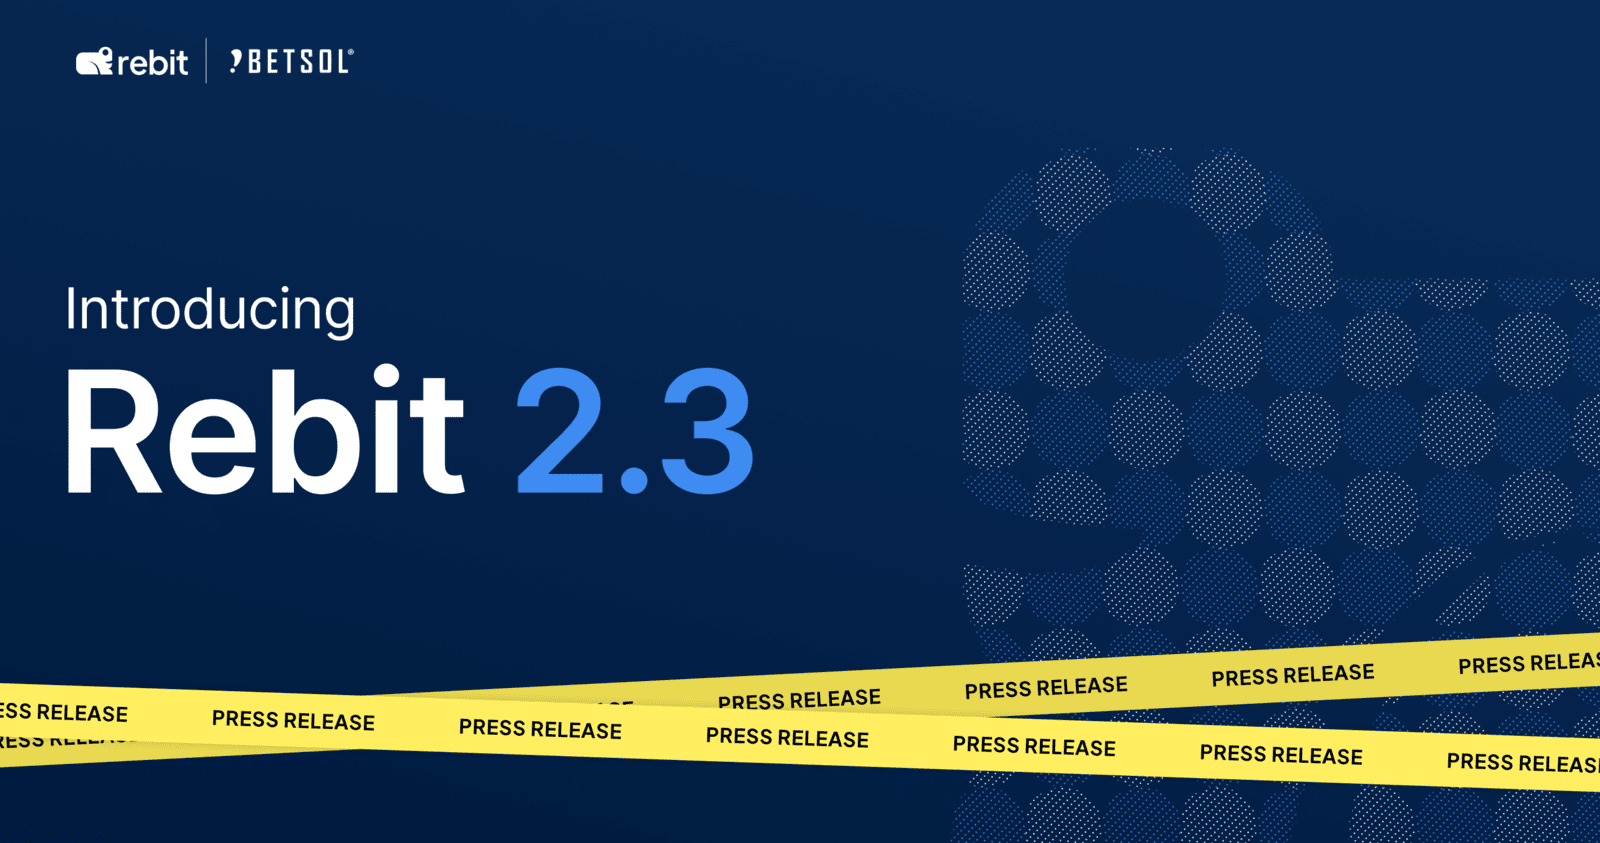 Betsol Press Release of Rebit 2.3